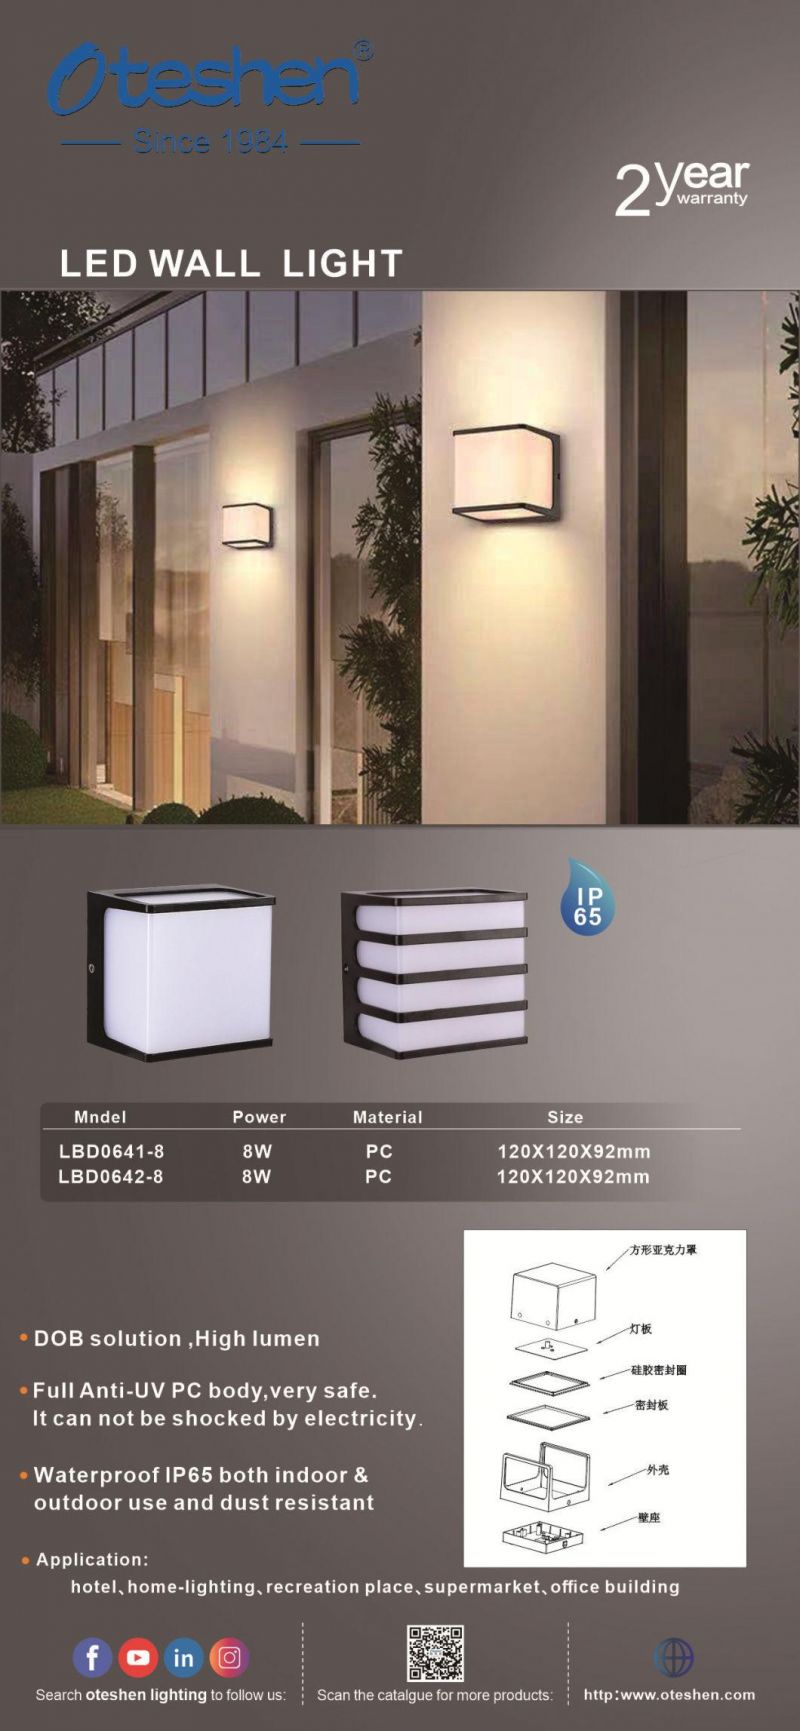 Shadeless CE Approved Oteshen 120X120X92mm Foshan Wall Lamp Garden Light Lbd0641-8